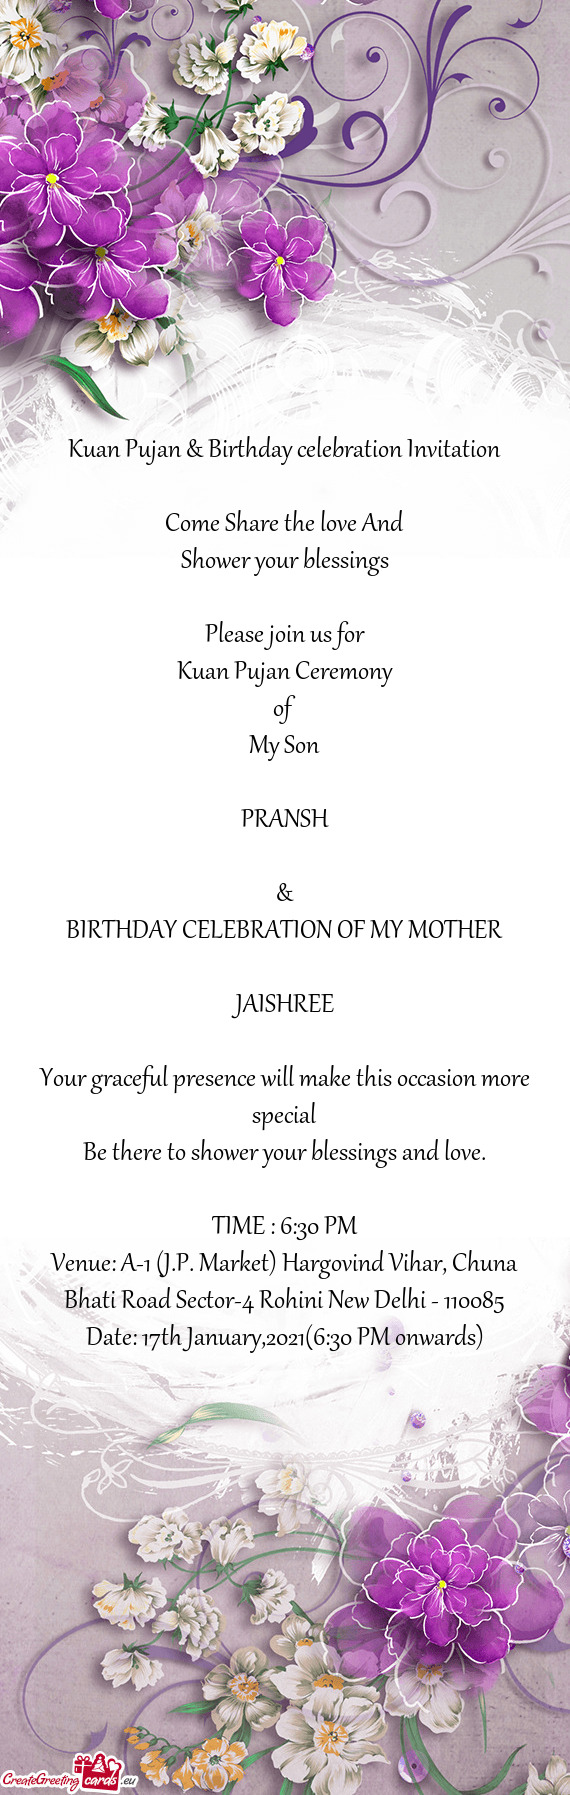 Kuan Pujan & Birthday celebration Invitation